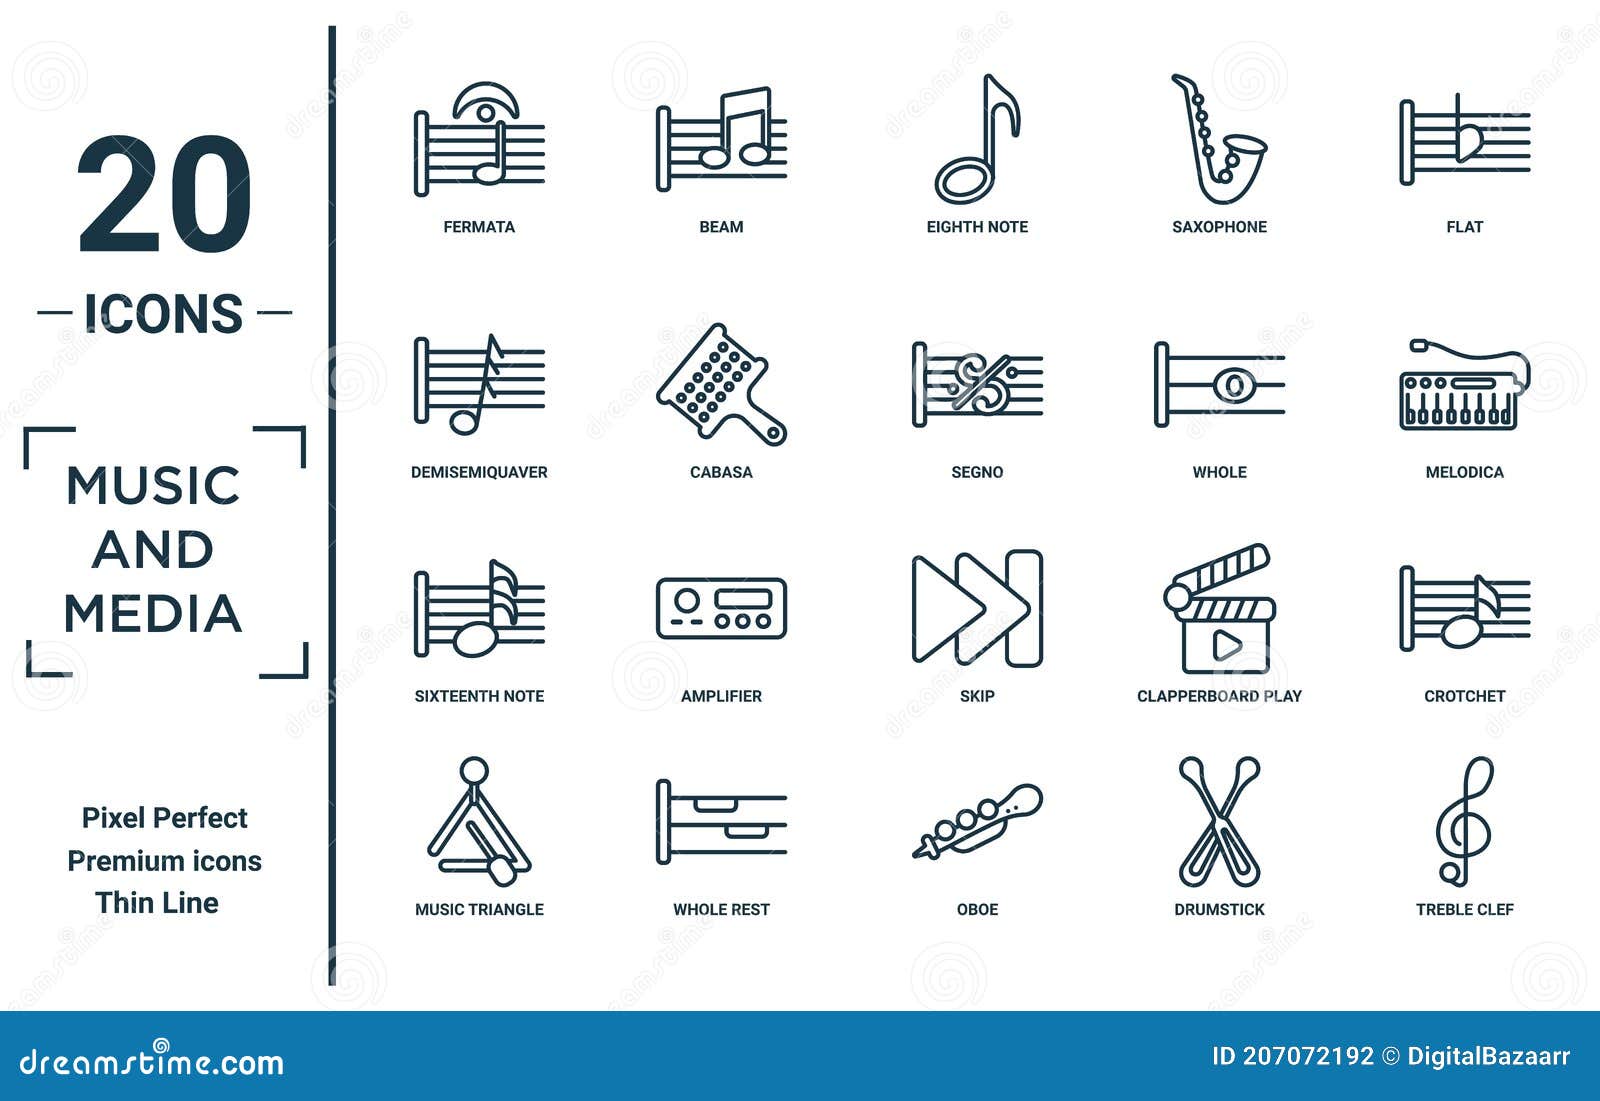 music.and.media linear icon set. includes thin line fermata, demisemiquaver, sixteenth note, music triangle, treble clef, segno,